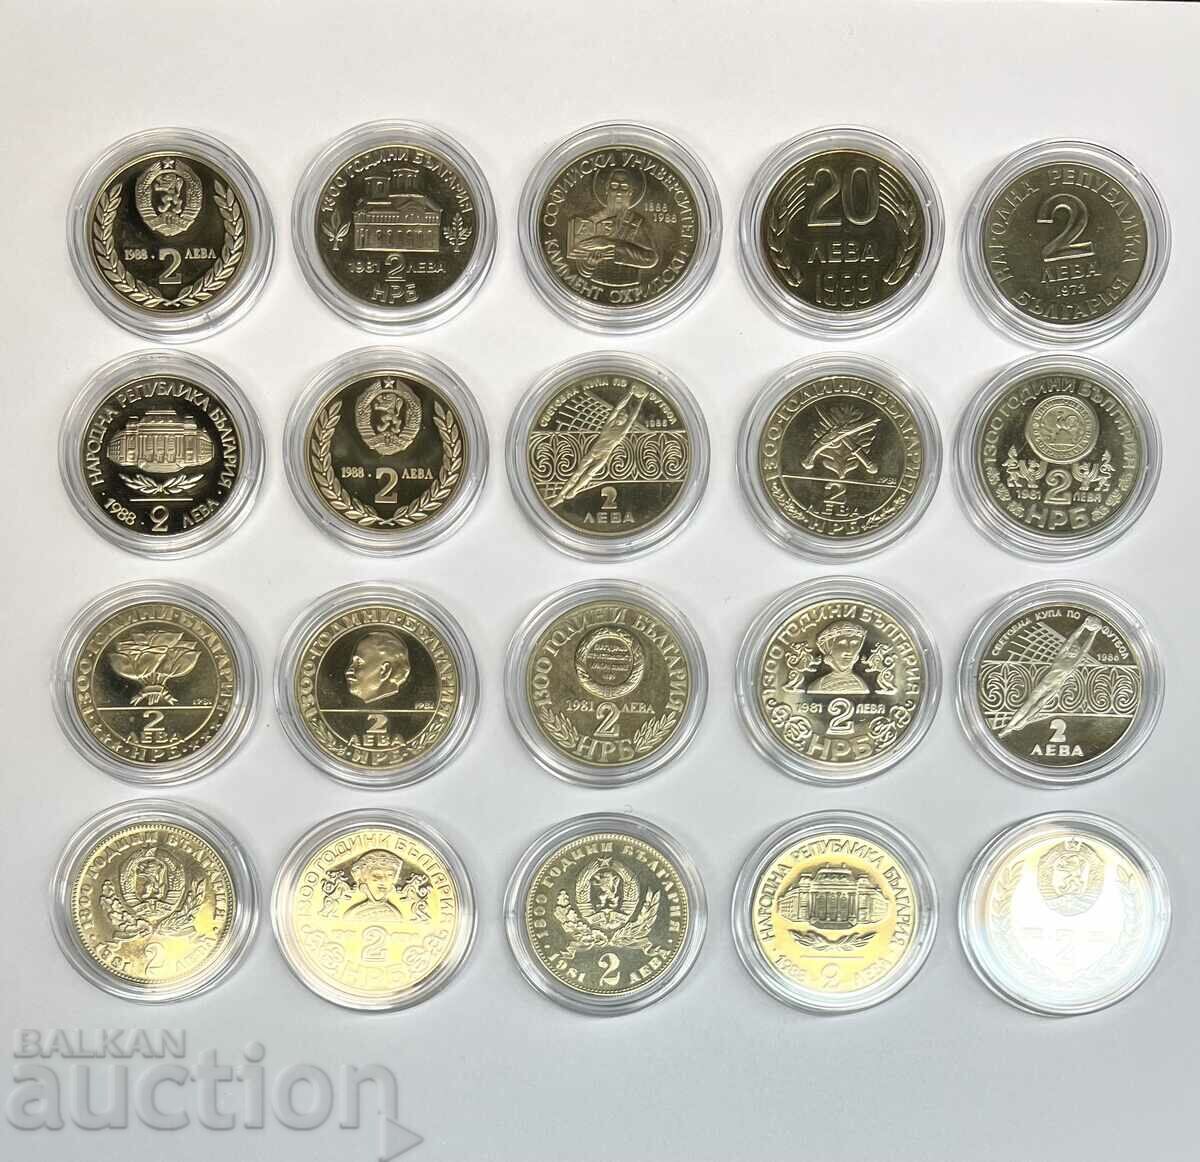 Lot 20 pcs. Jubilee coins 2 BGN 1980s NRB